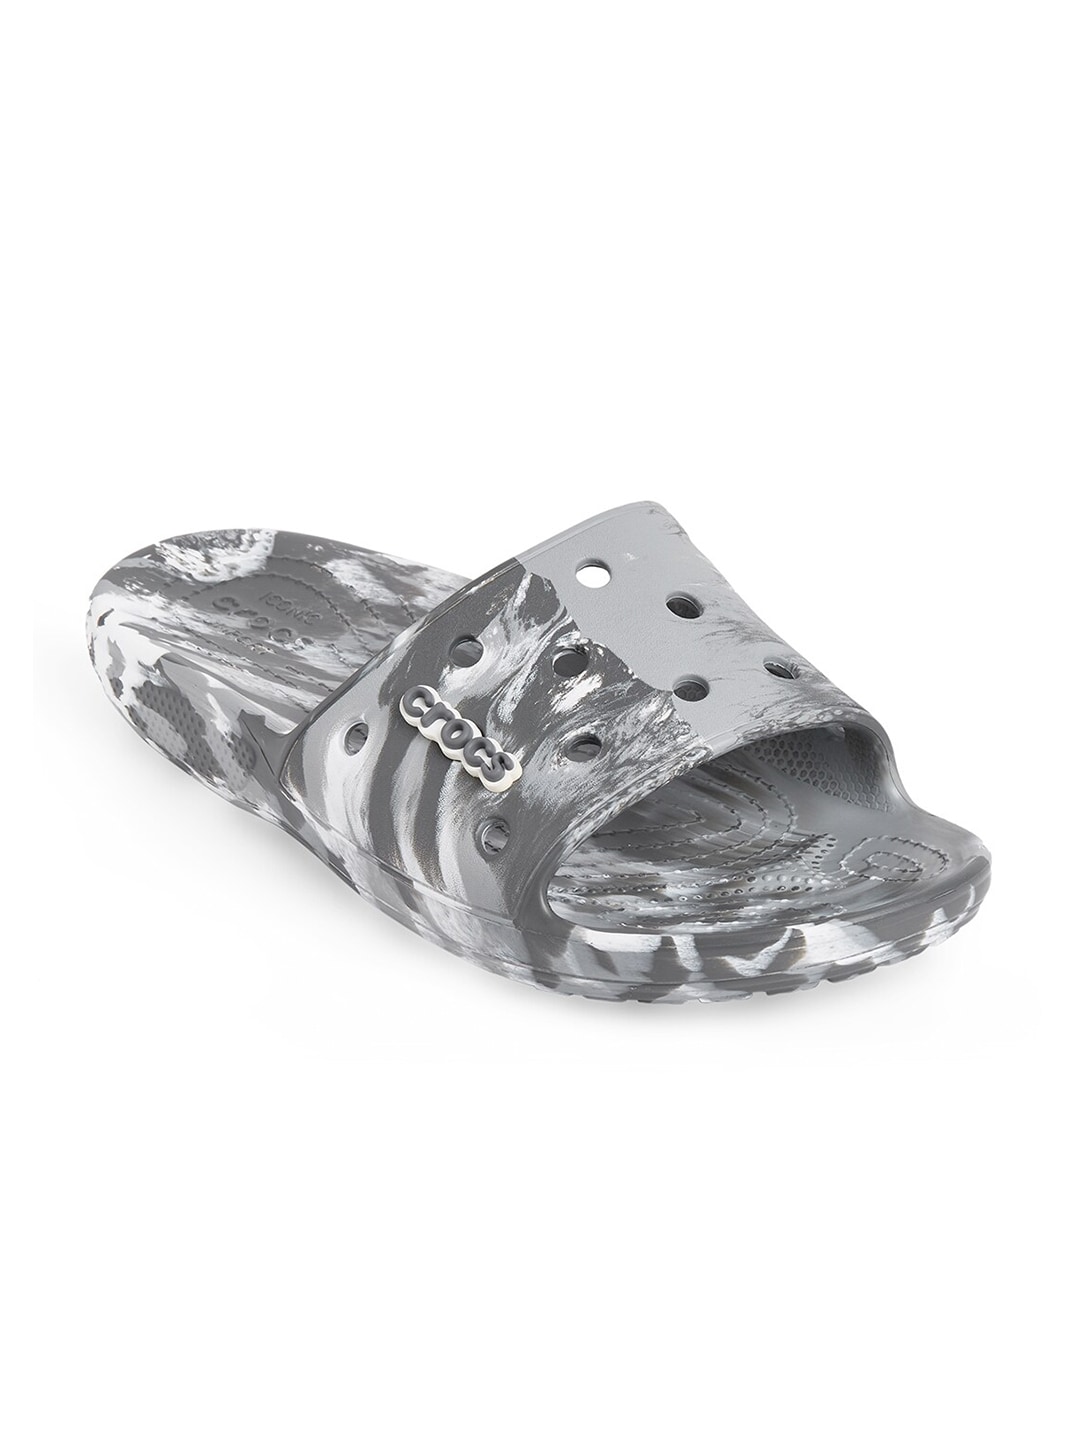 Crocs Unisex Grey & White Printed Croslite Sliders Price in India